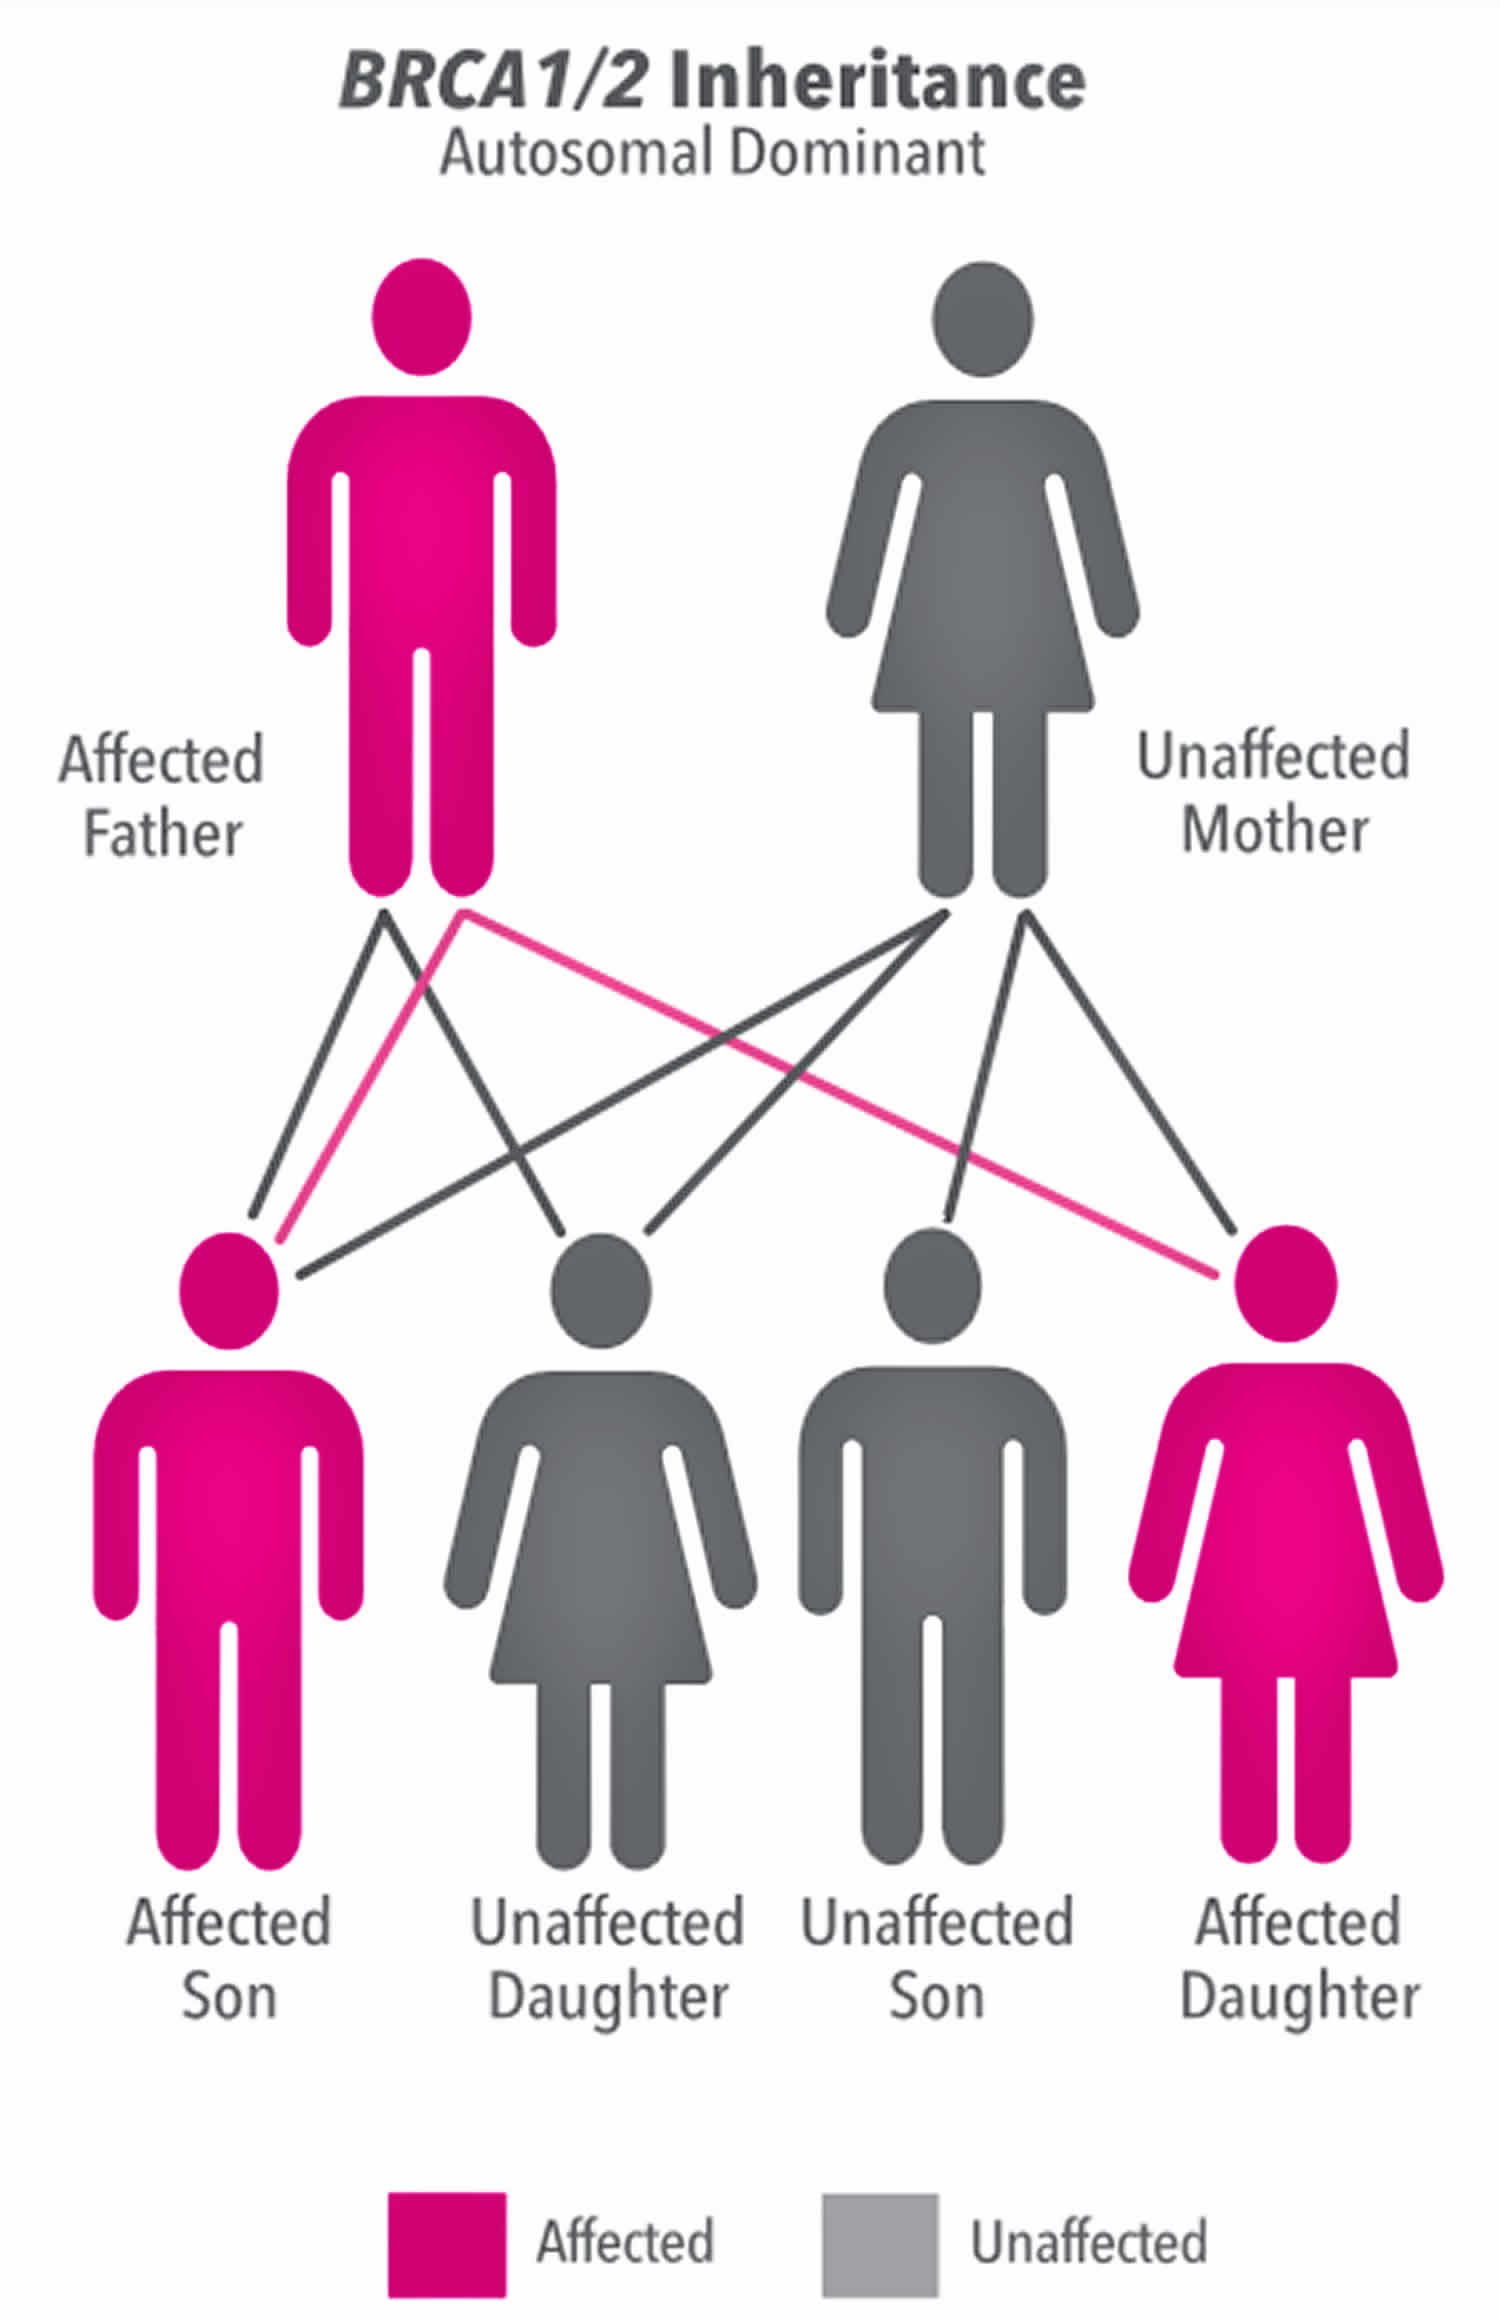 BRCA gene autosomal dominant inheritance pattern